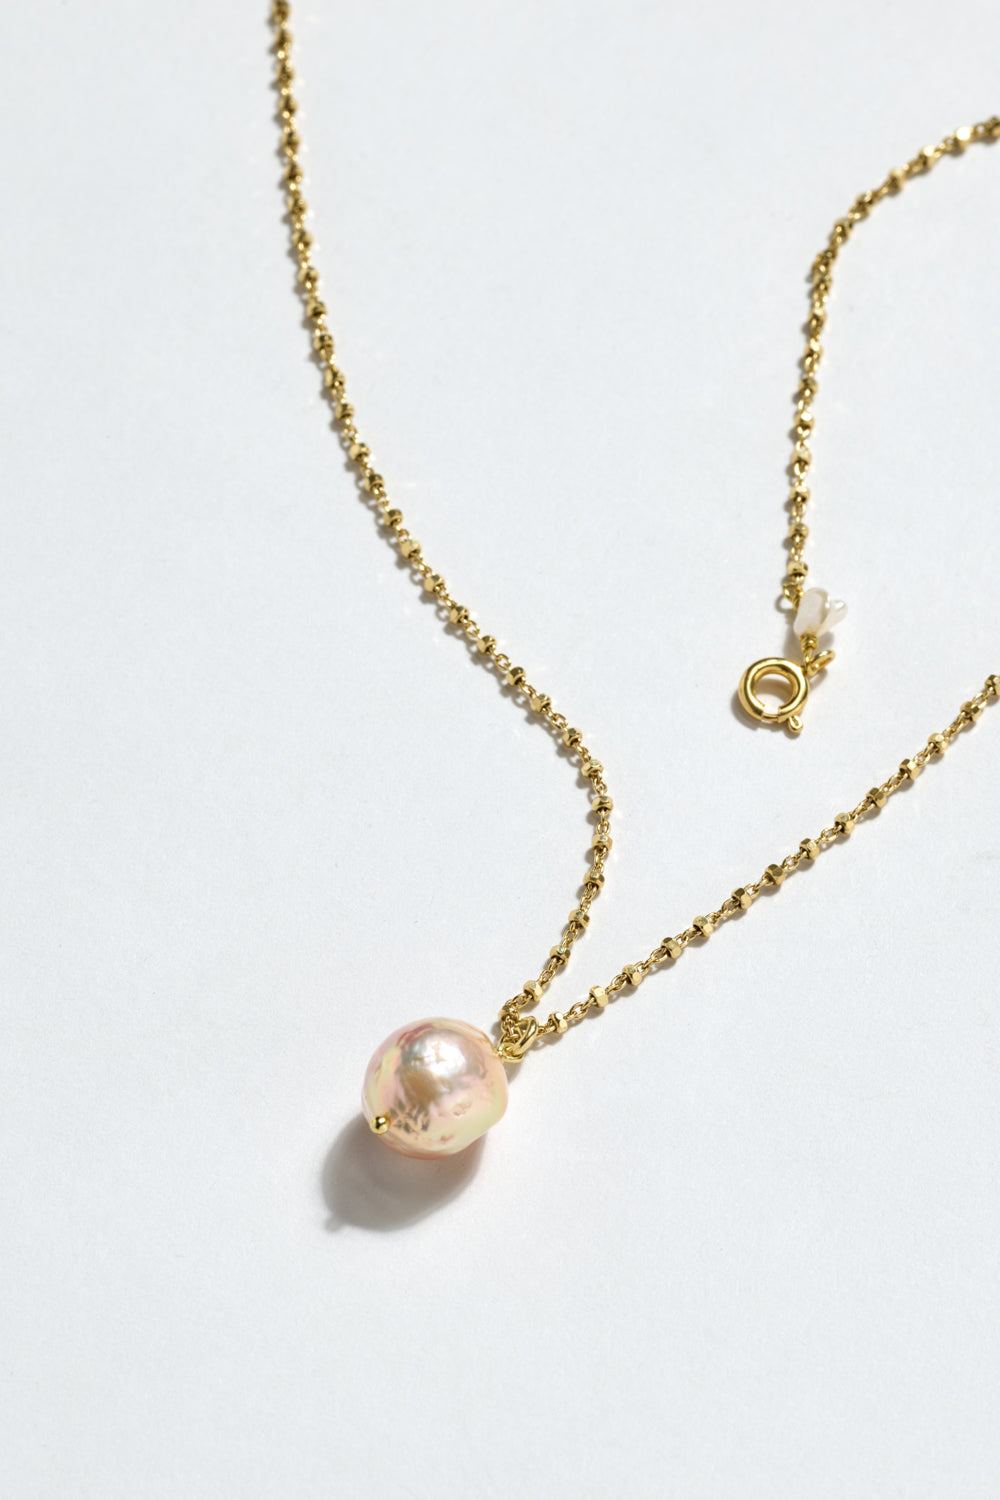 Shop Semi Fine Necklaces | Buccarello Jewellery